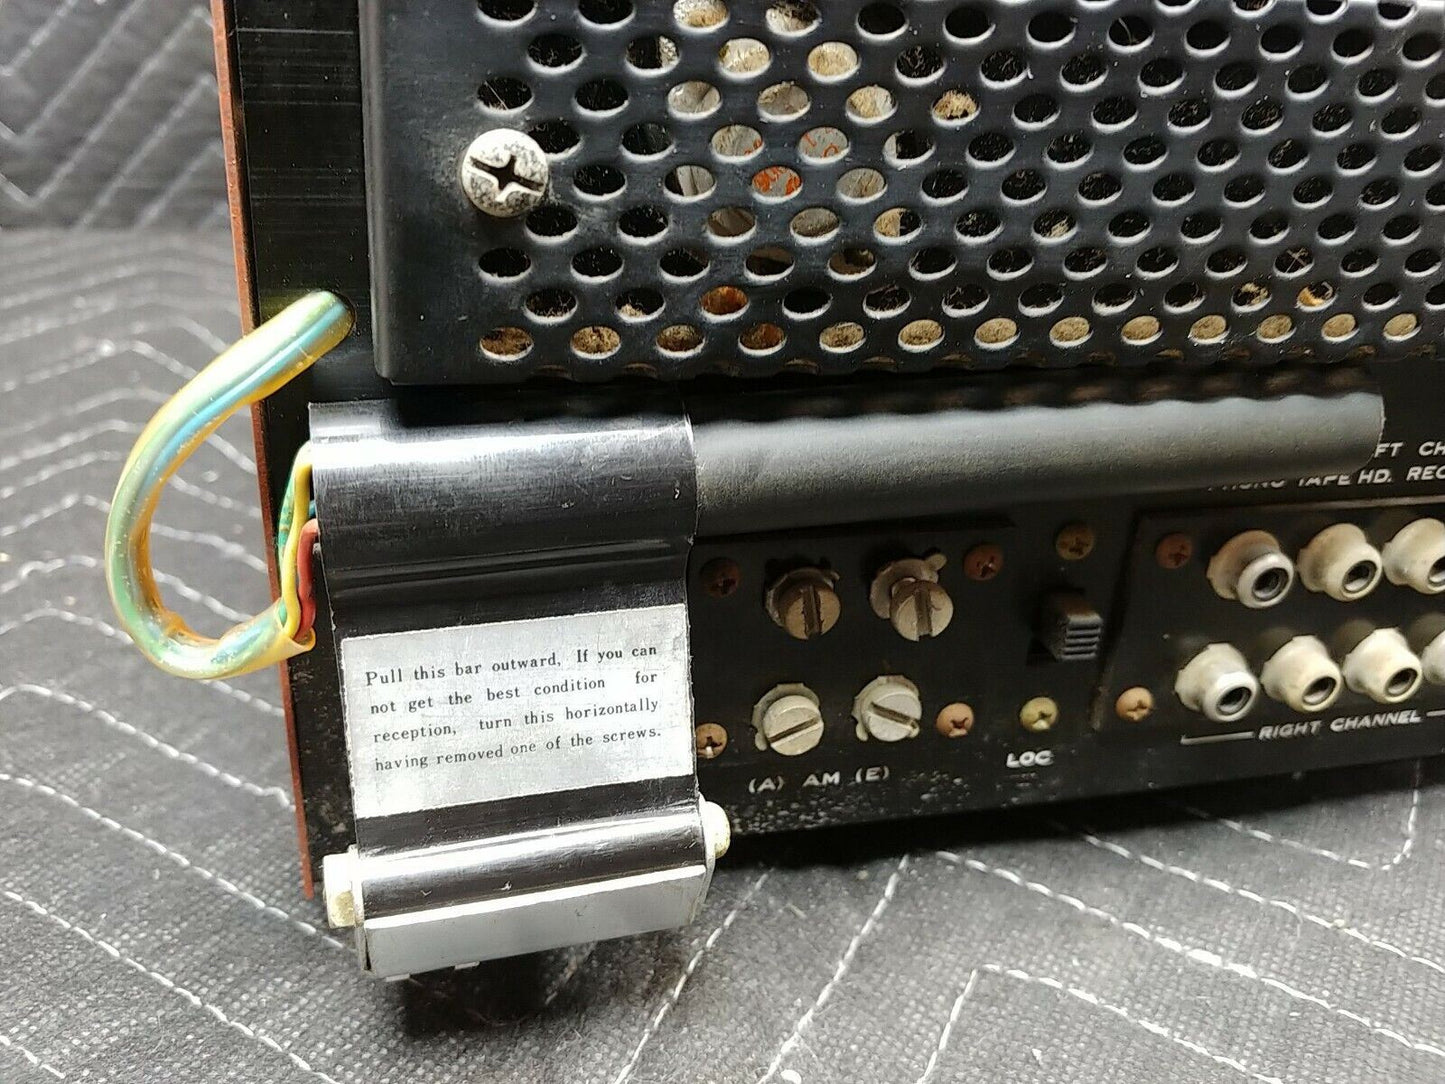 Vintage Sansui 3000A Stereo Receiver